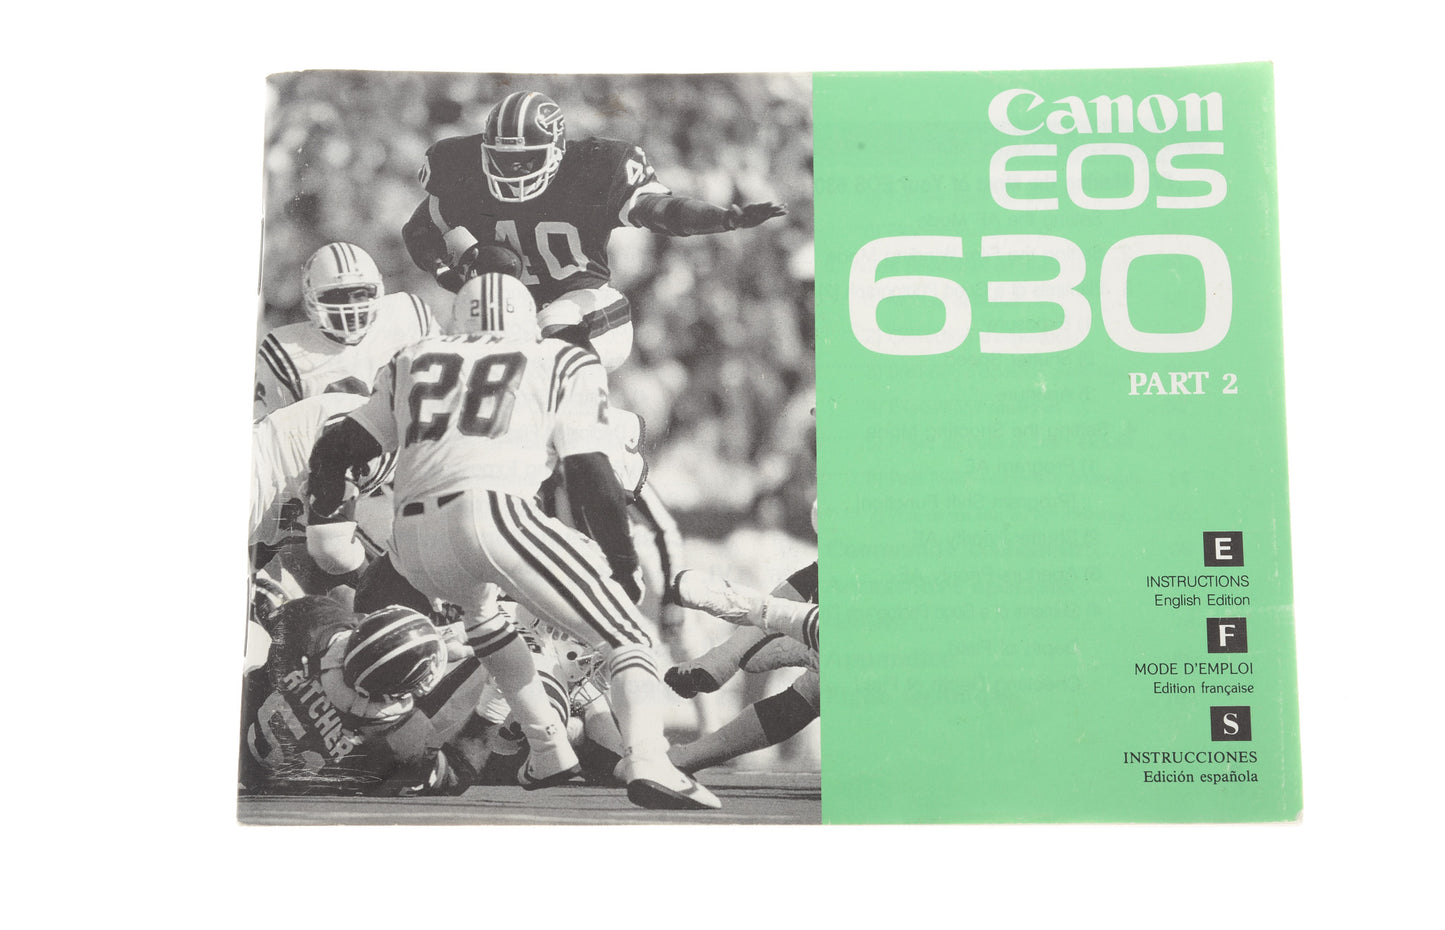 Canon EOS 630 Instructions Part 2